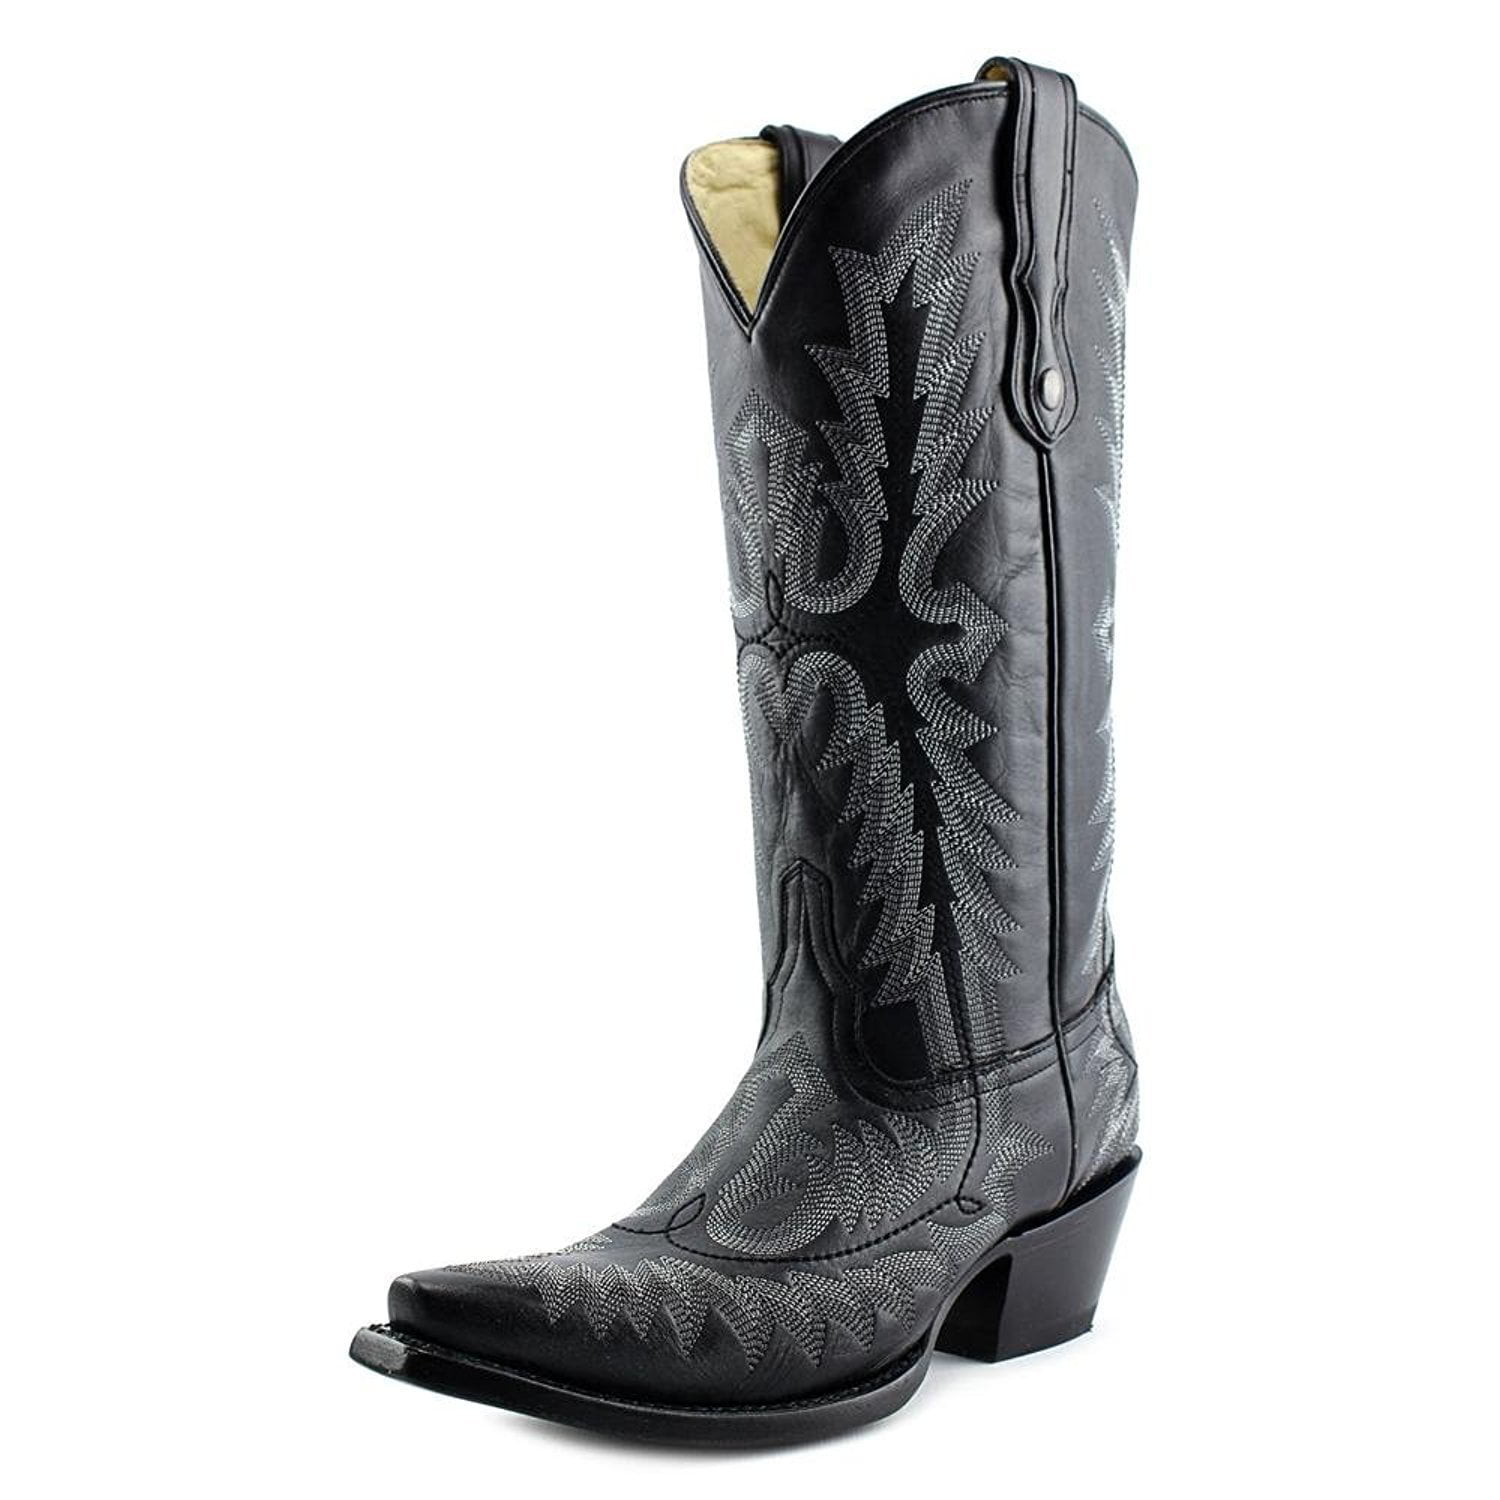 Kangaroo beans Follow us CORRAL Women's Picasso Black Full Stitch Snip Toe Boots G1911 (9 C(W) US) -  Walmart.com